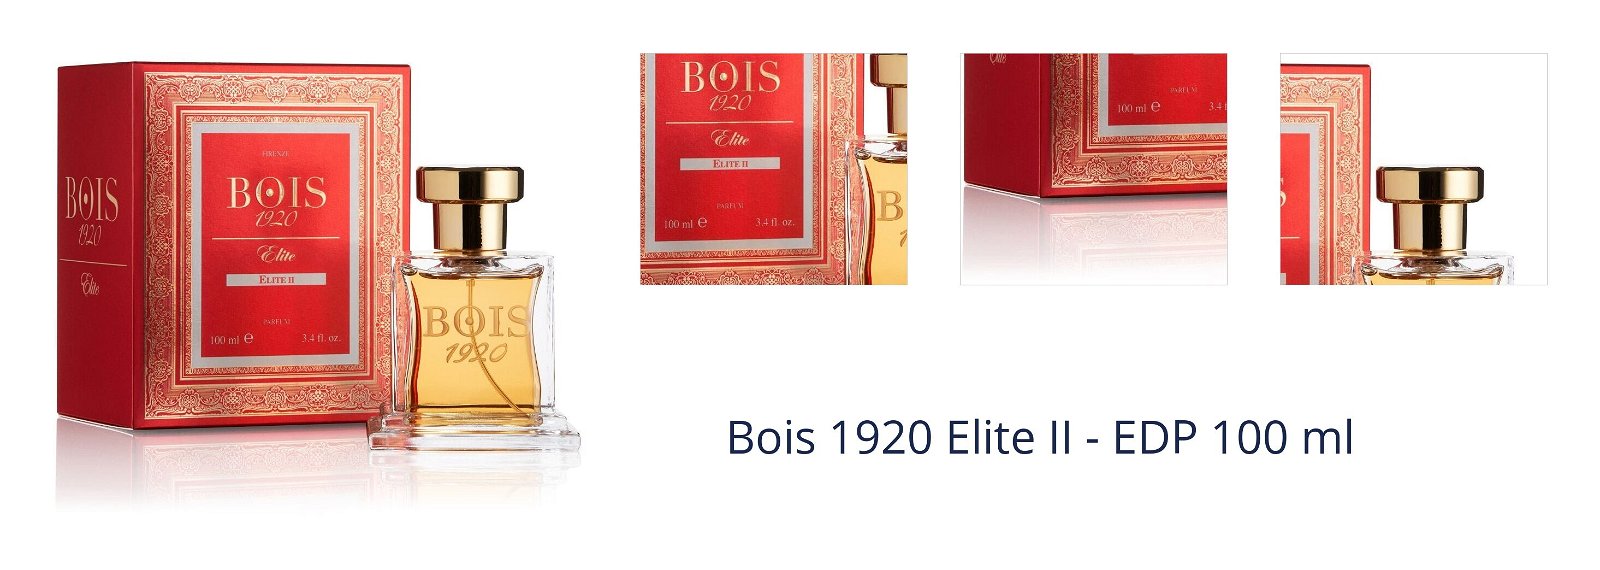 Bois 1920 Elite II - EDP 100 ml 1